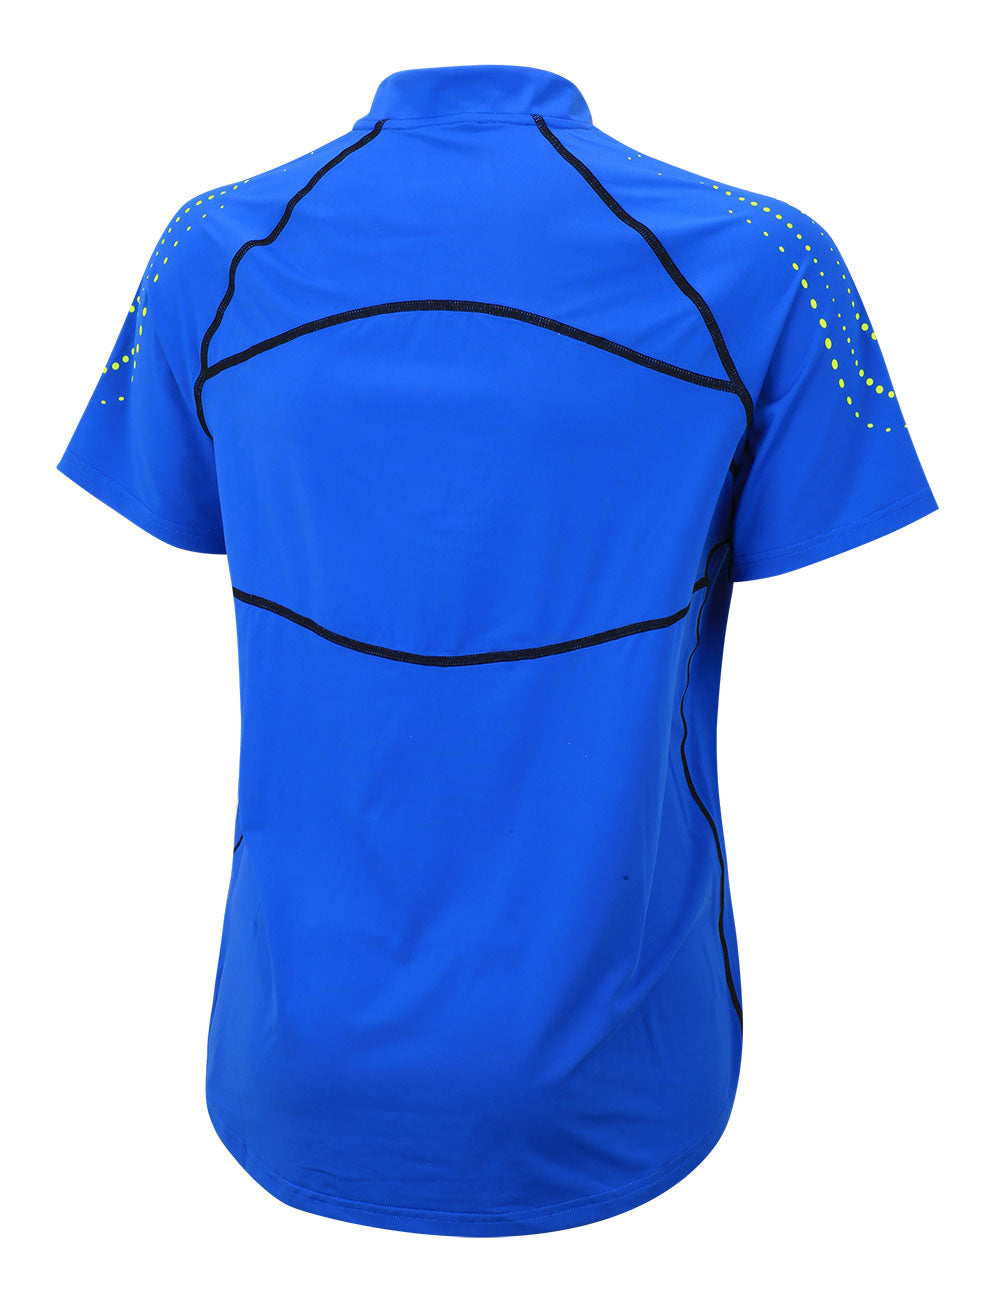 laufshirt-fahrradtrikot-running-t-shirt-kompression-pro-team-neon-blau-herren-damen-kurzarm-langarm-xs-s-m-l-xl-xxl-xxxl-long-back